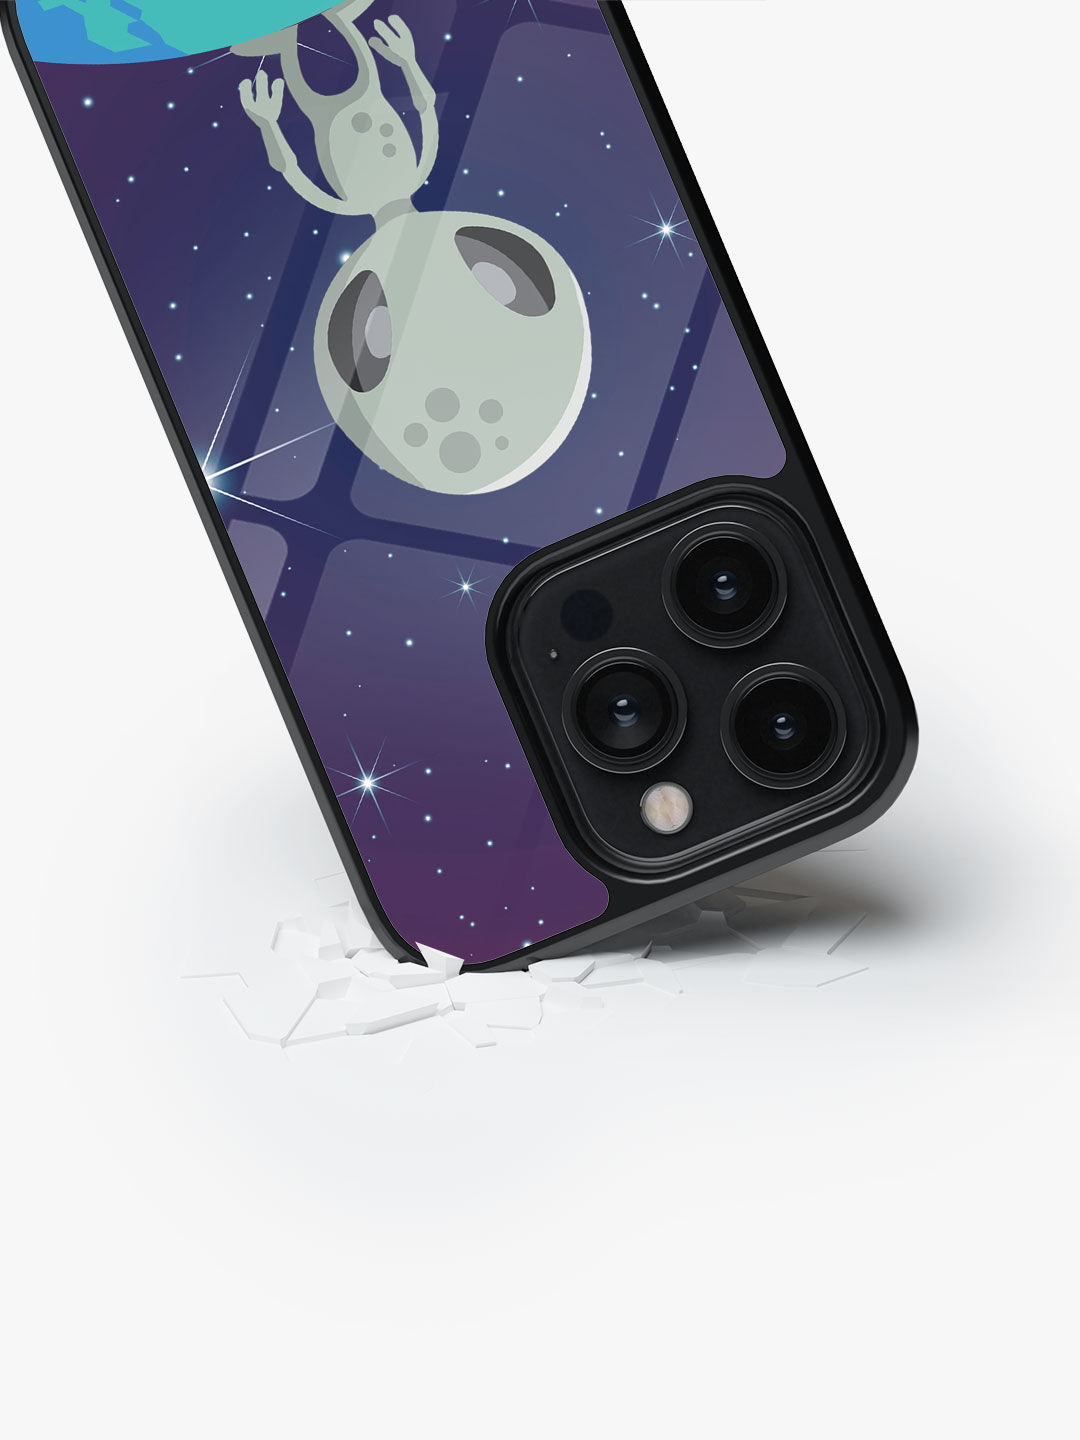 Buy Hakuna Matata Macmerise Glass Case for iPhone 11 Pro Max Online